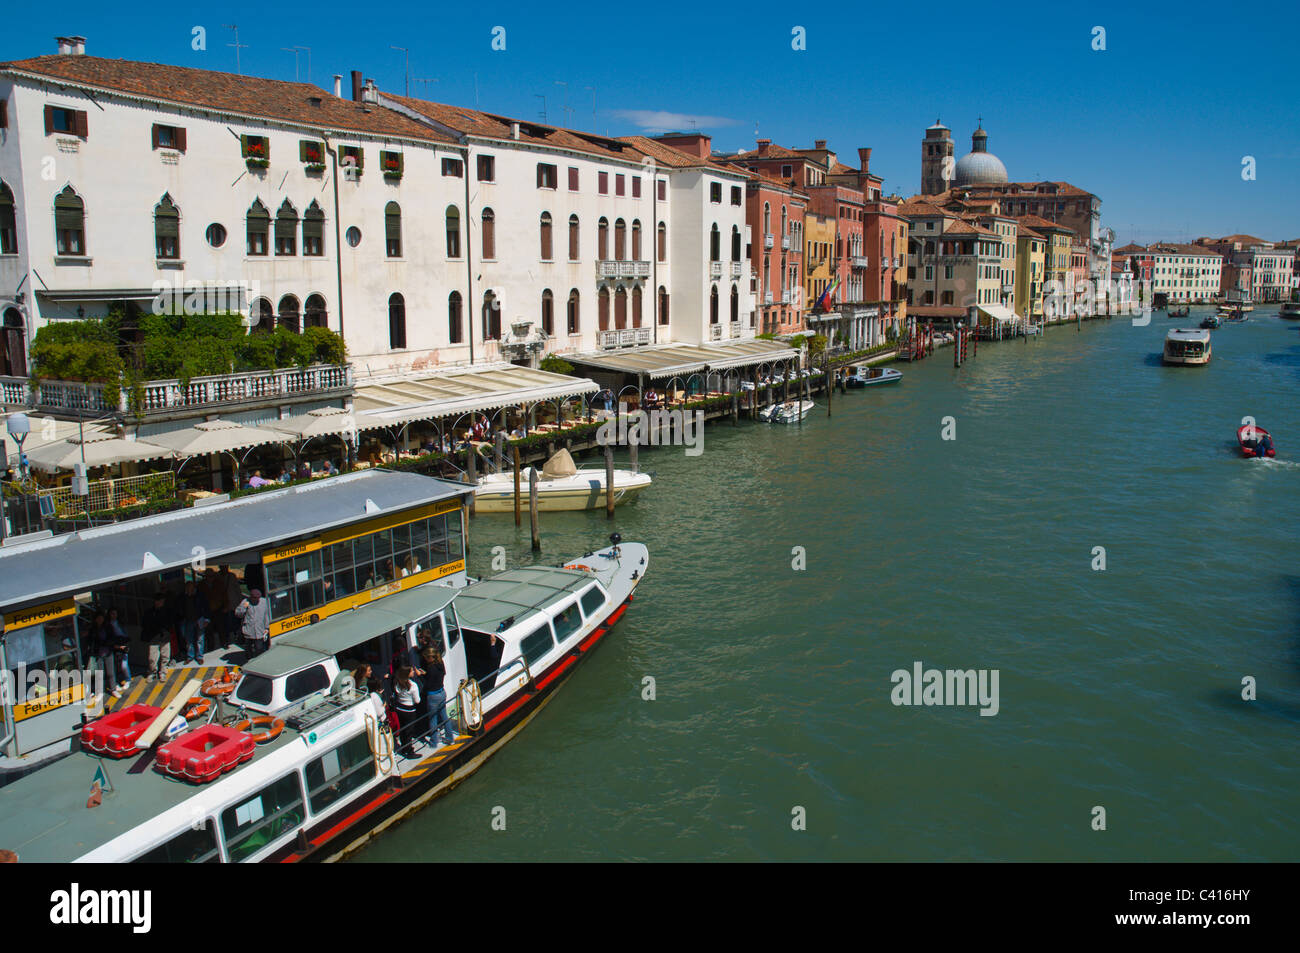 Ferrovia water bus stop at Scalzi bridge Venice Italy Europe Stock Photo